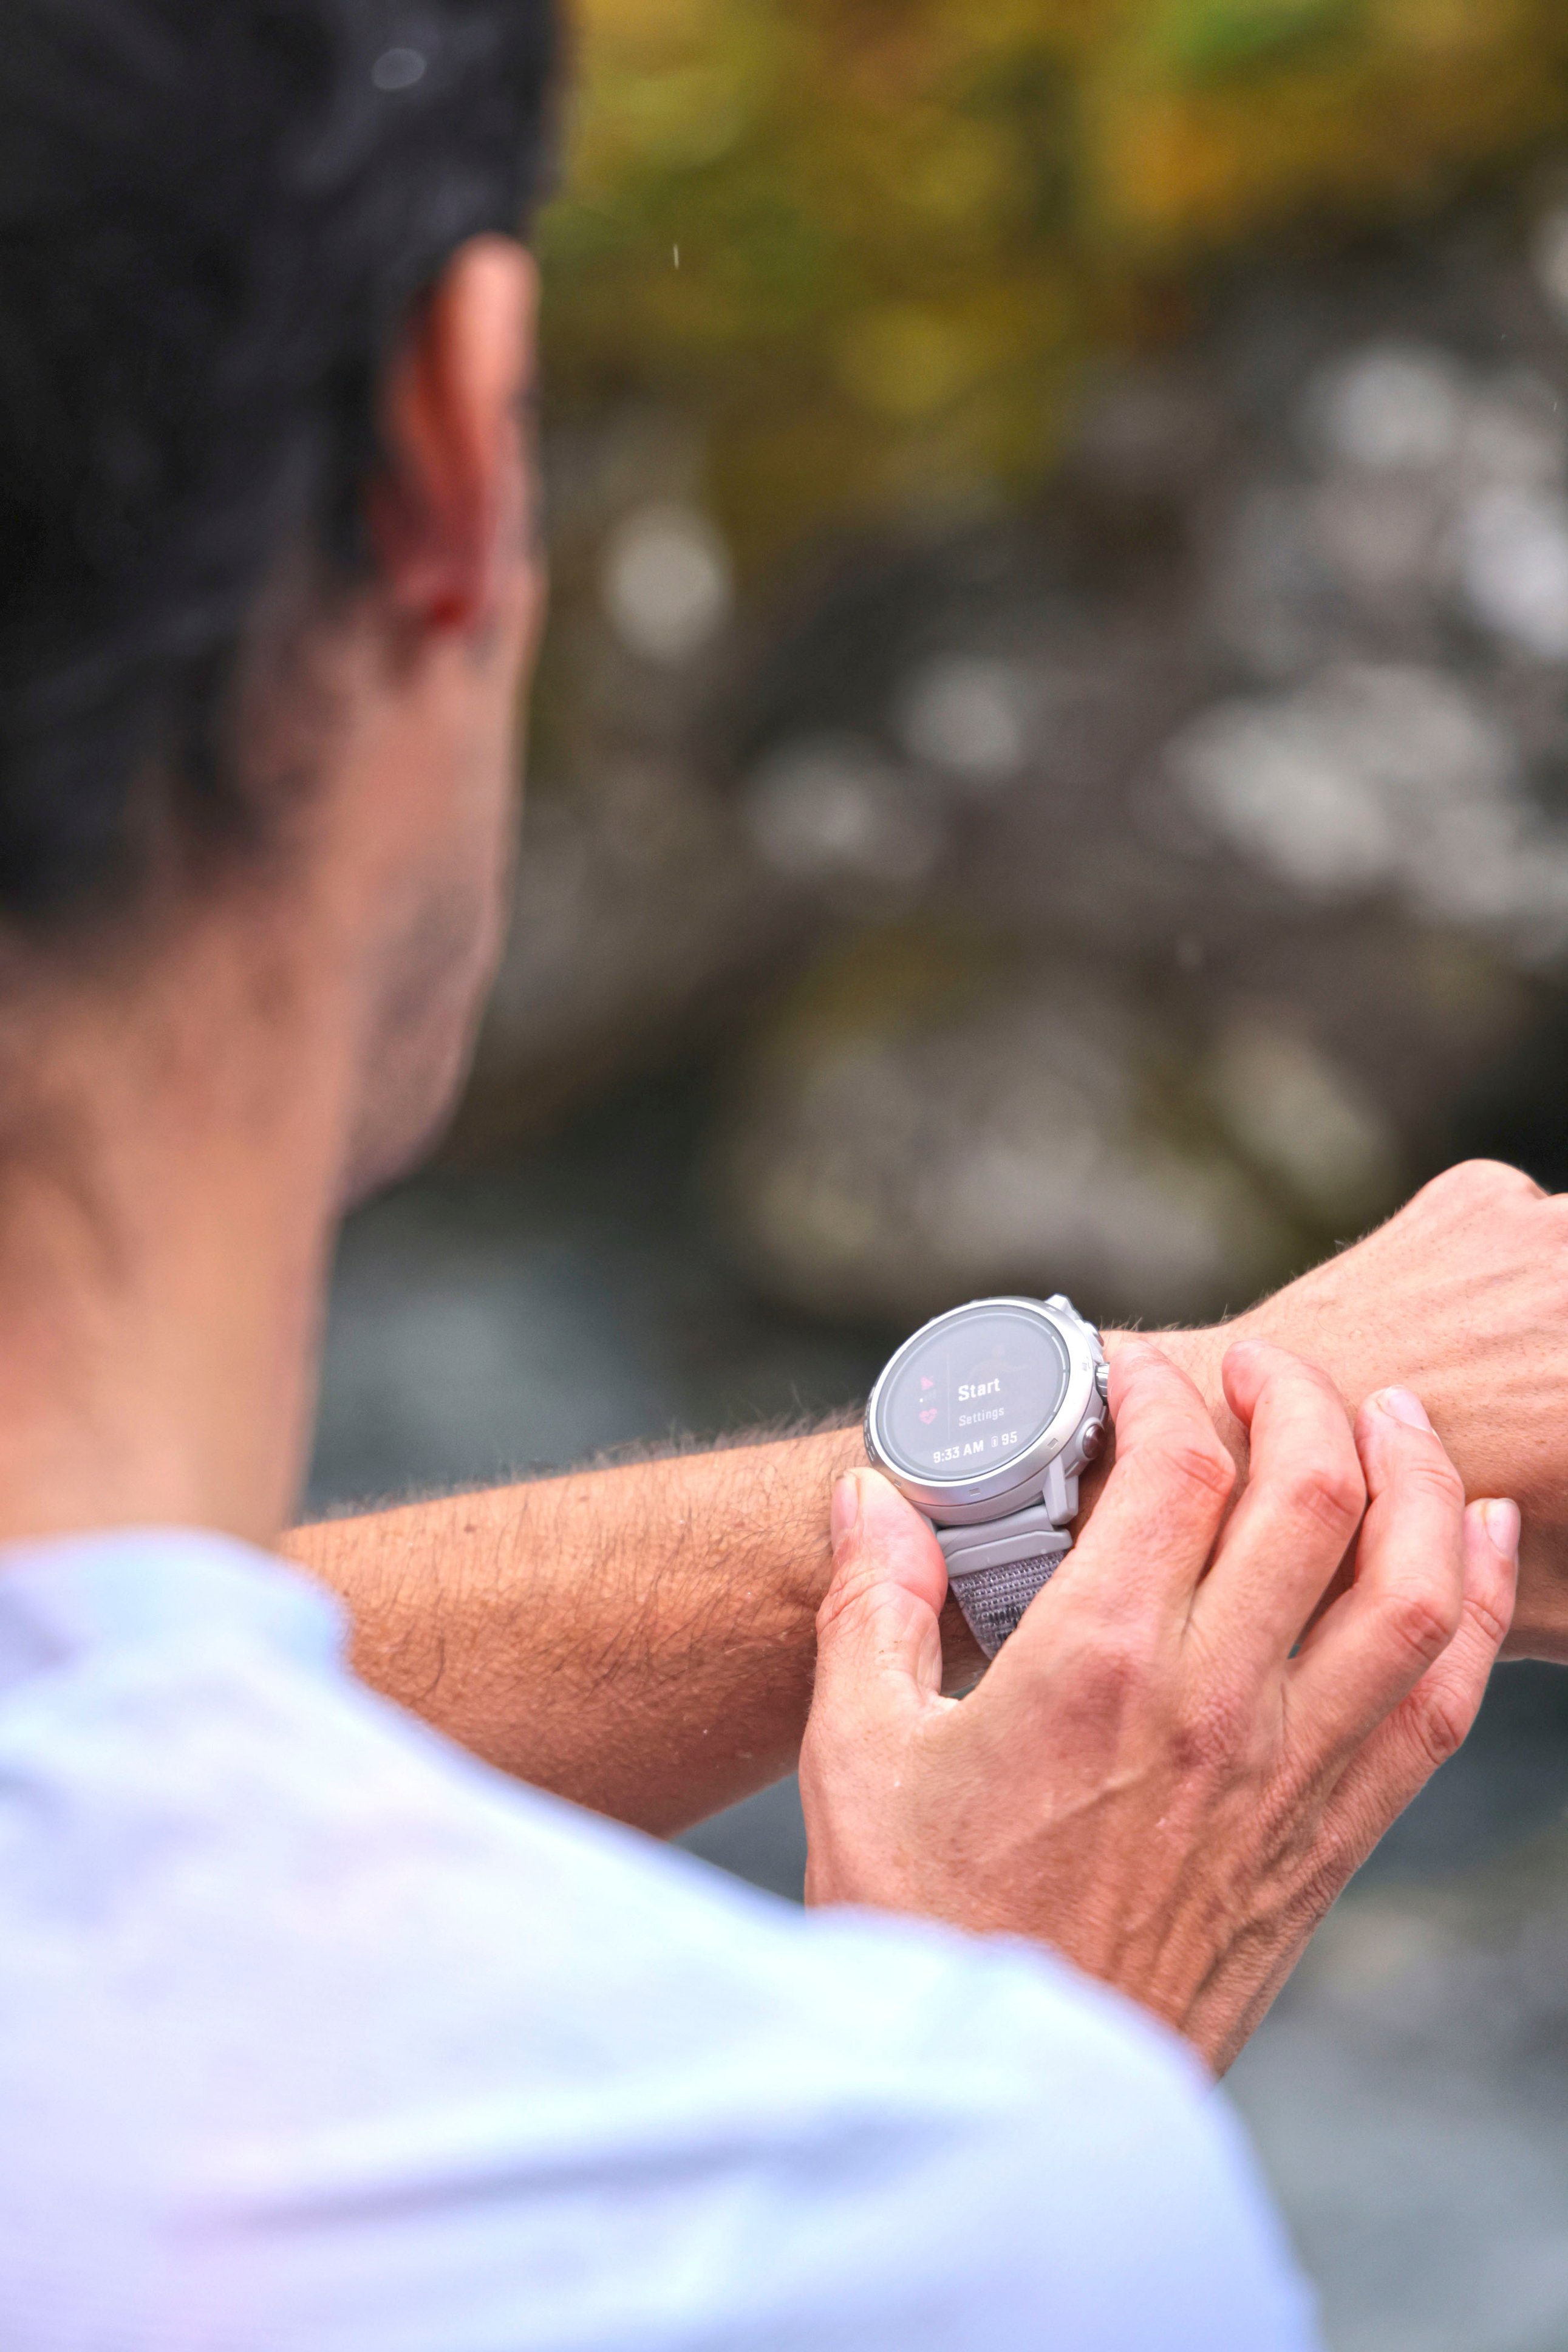  COROS APEX 2 Pro Outdoor GPS Watch, 1.3 Sapphire Titanium,  24-Day Battery Life, Dual-Freq GPS, On-Wrist Navigation, Offline Maps,  Heart Rate Monitor, Track Sleep, Running, Biking, Climbing-Black :  Electronics